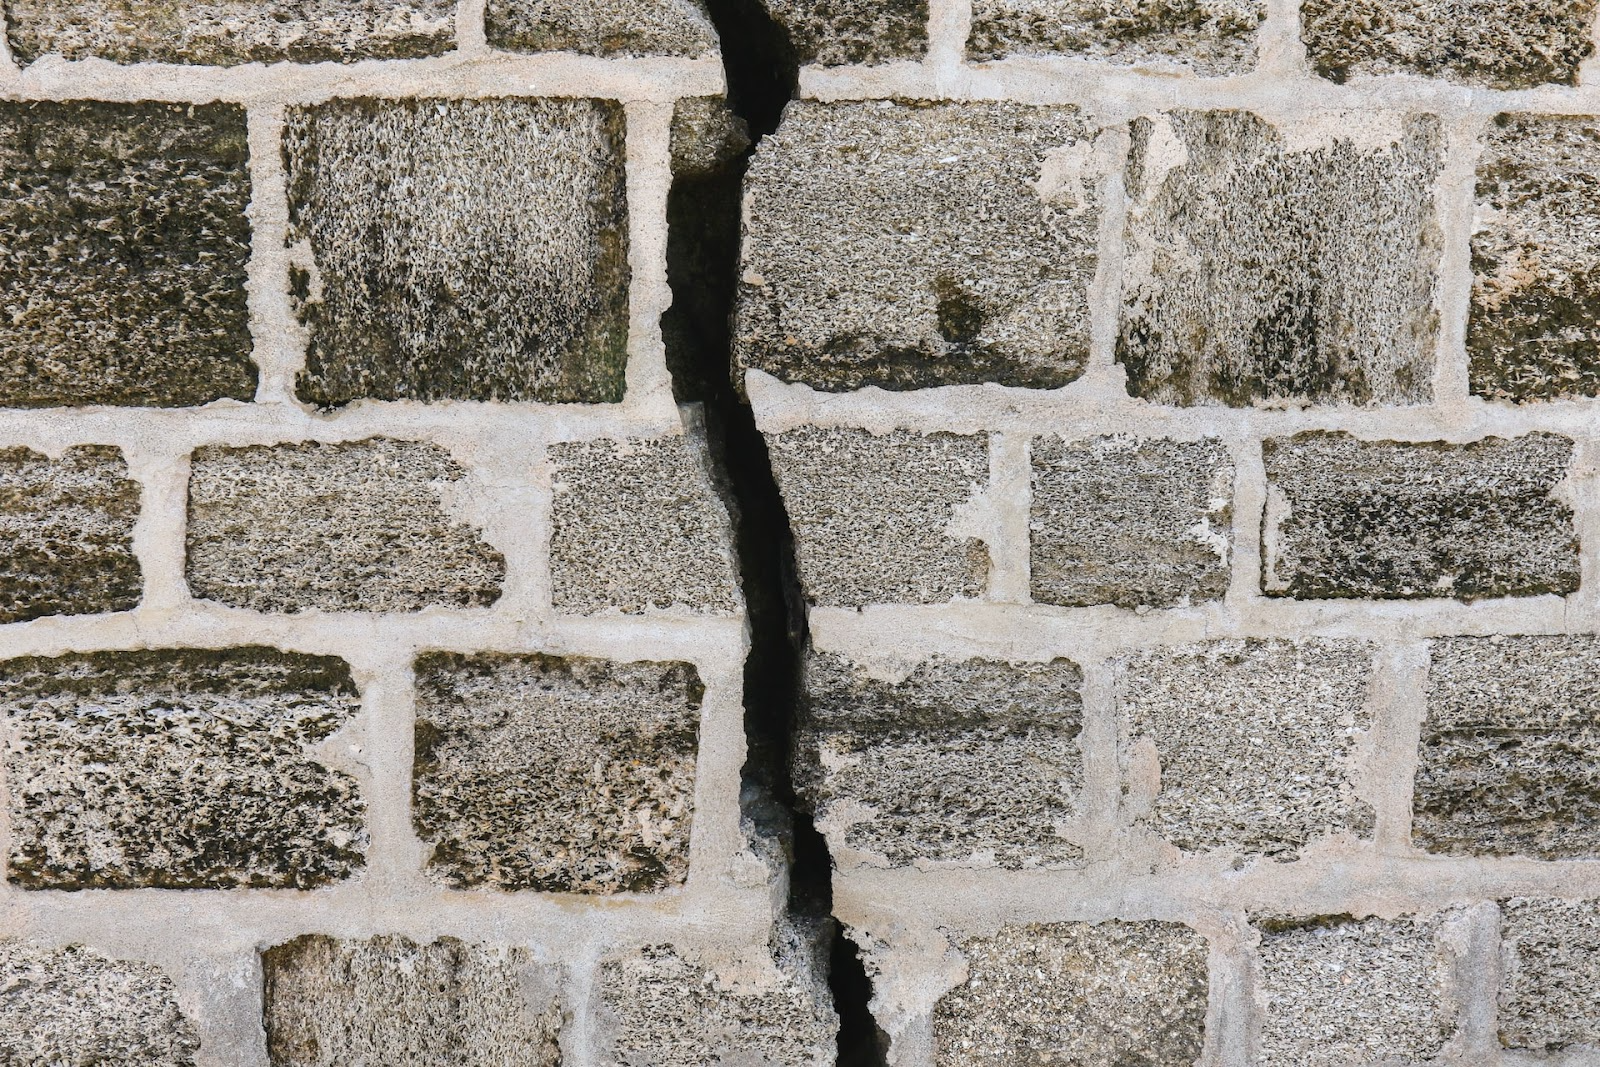 a deeply cracked grey brick wall